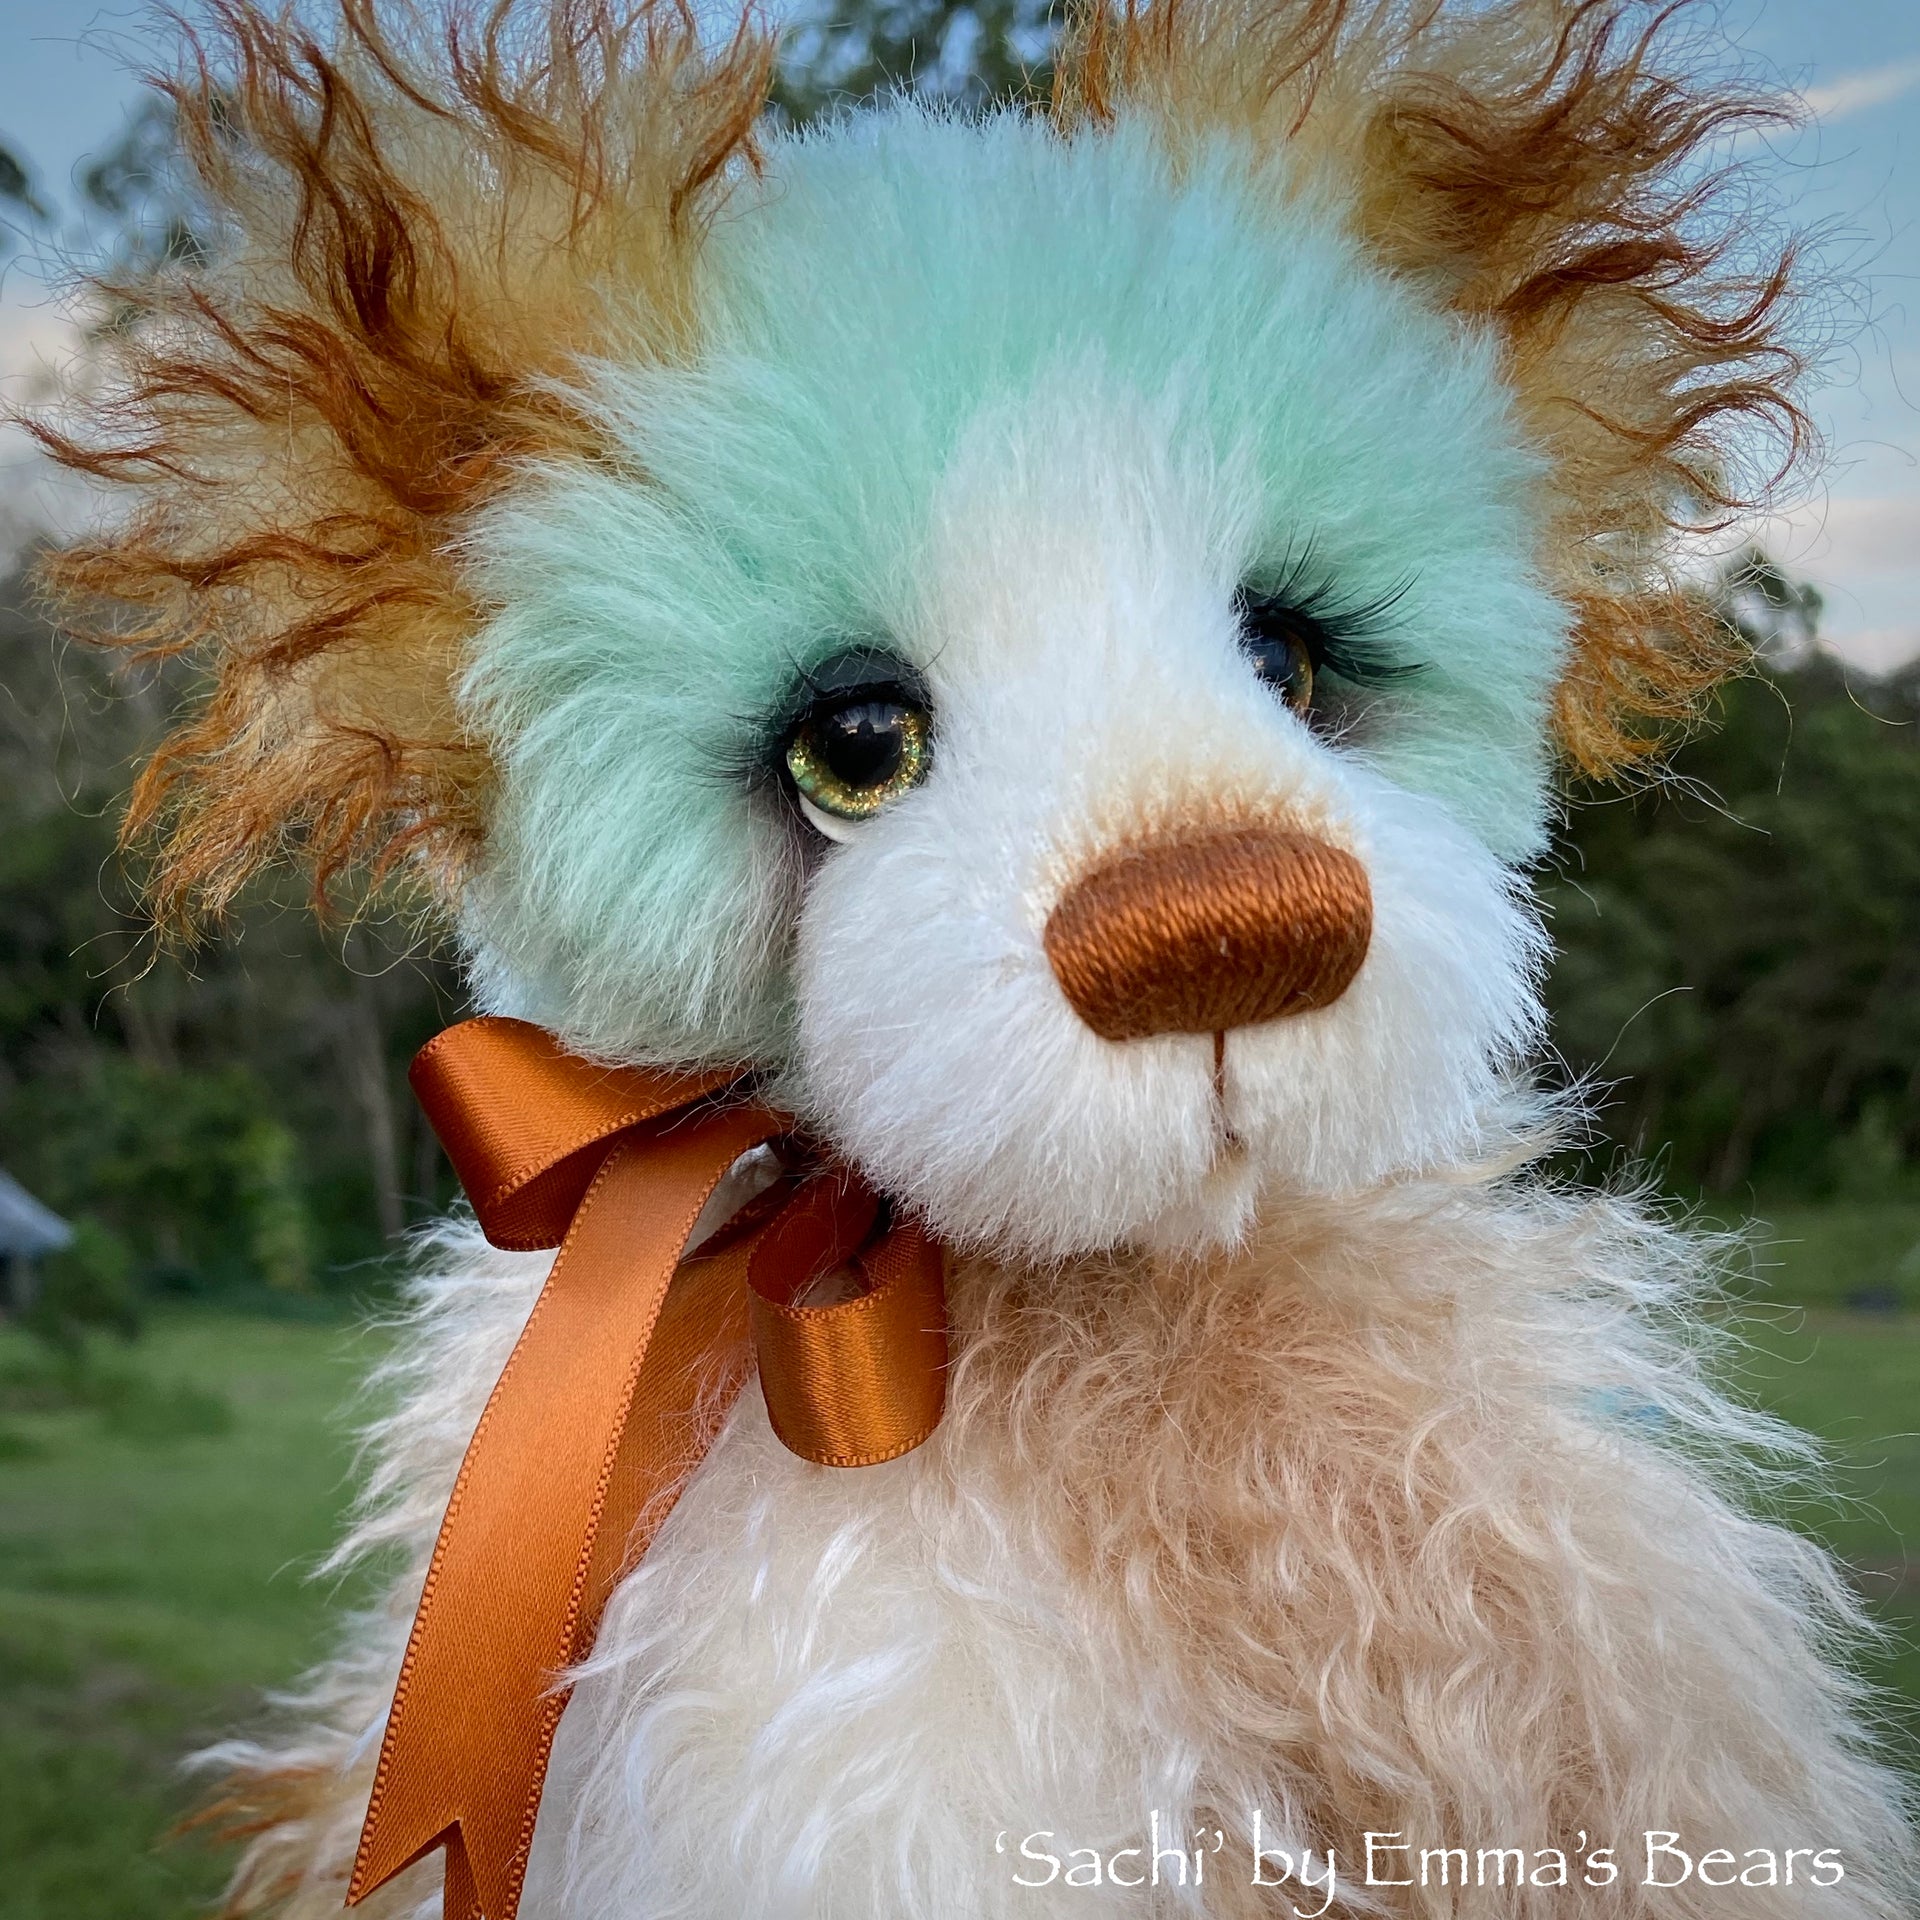 Sachi - 10" Hand Dyed Mohair and Alpaca Artist Bear by Emma's Bears - OOAK